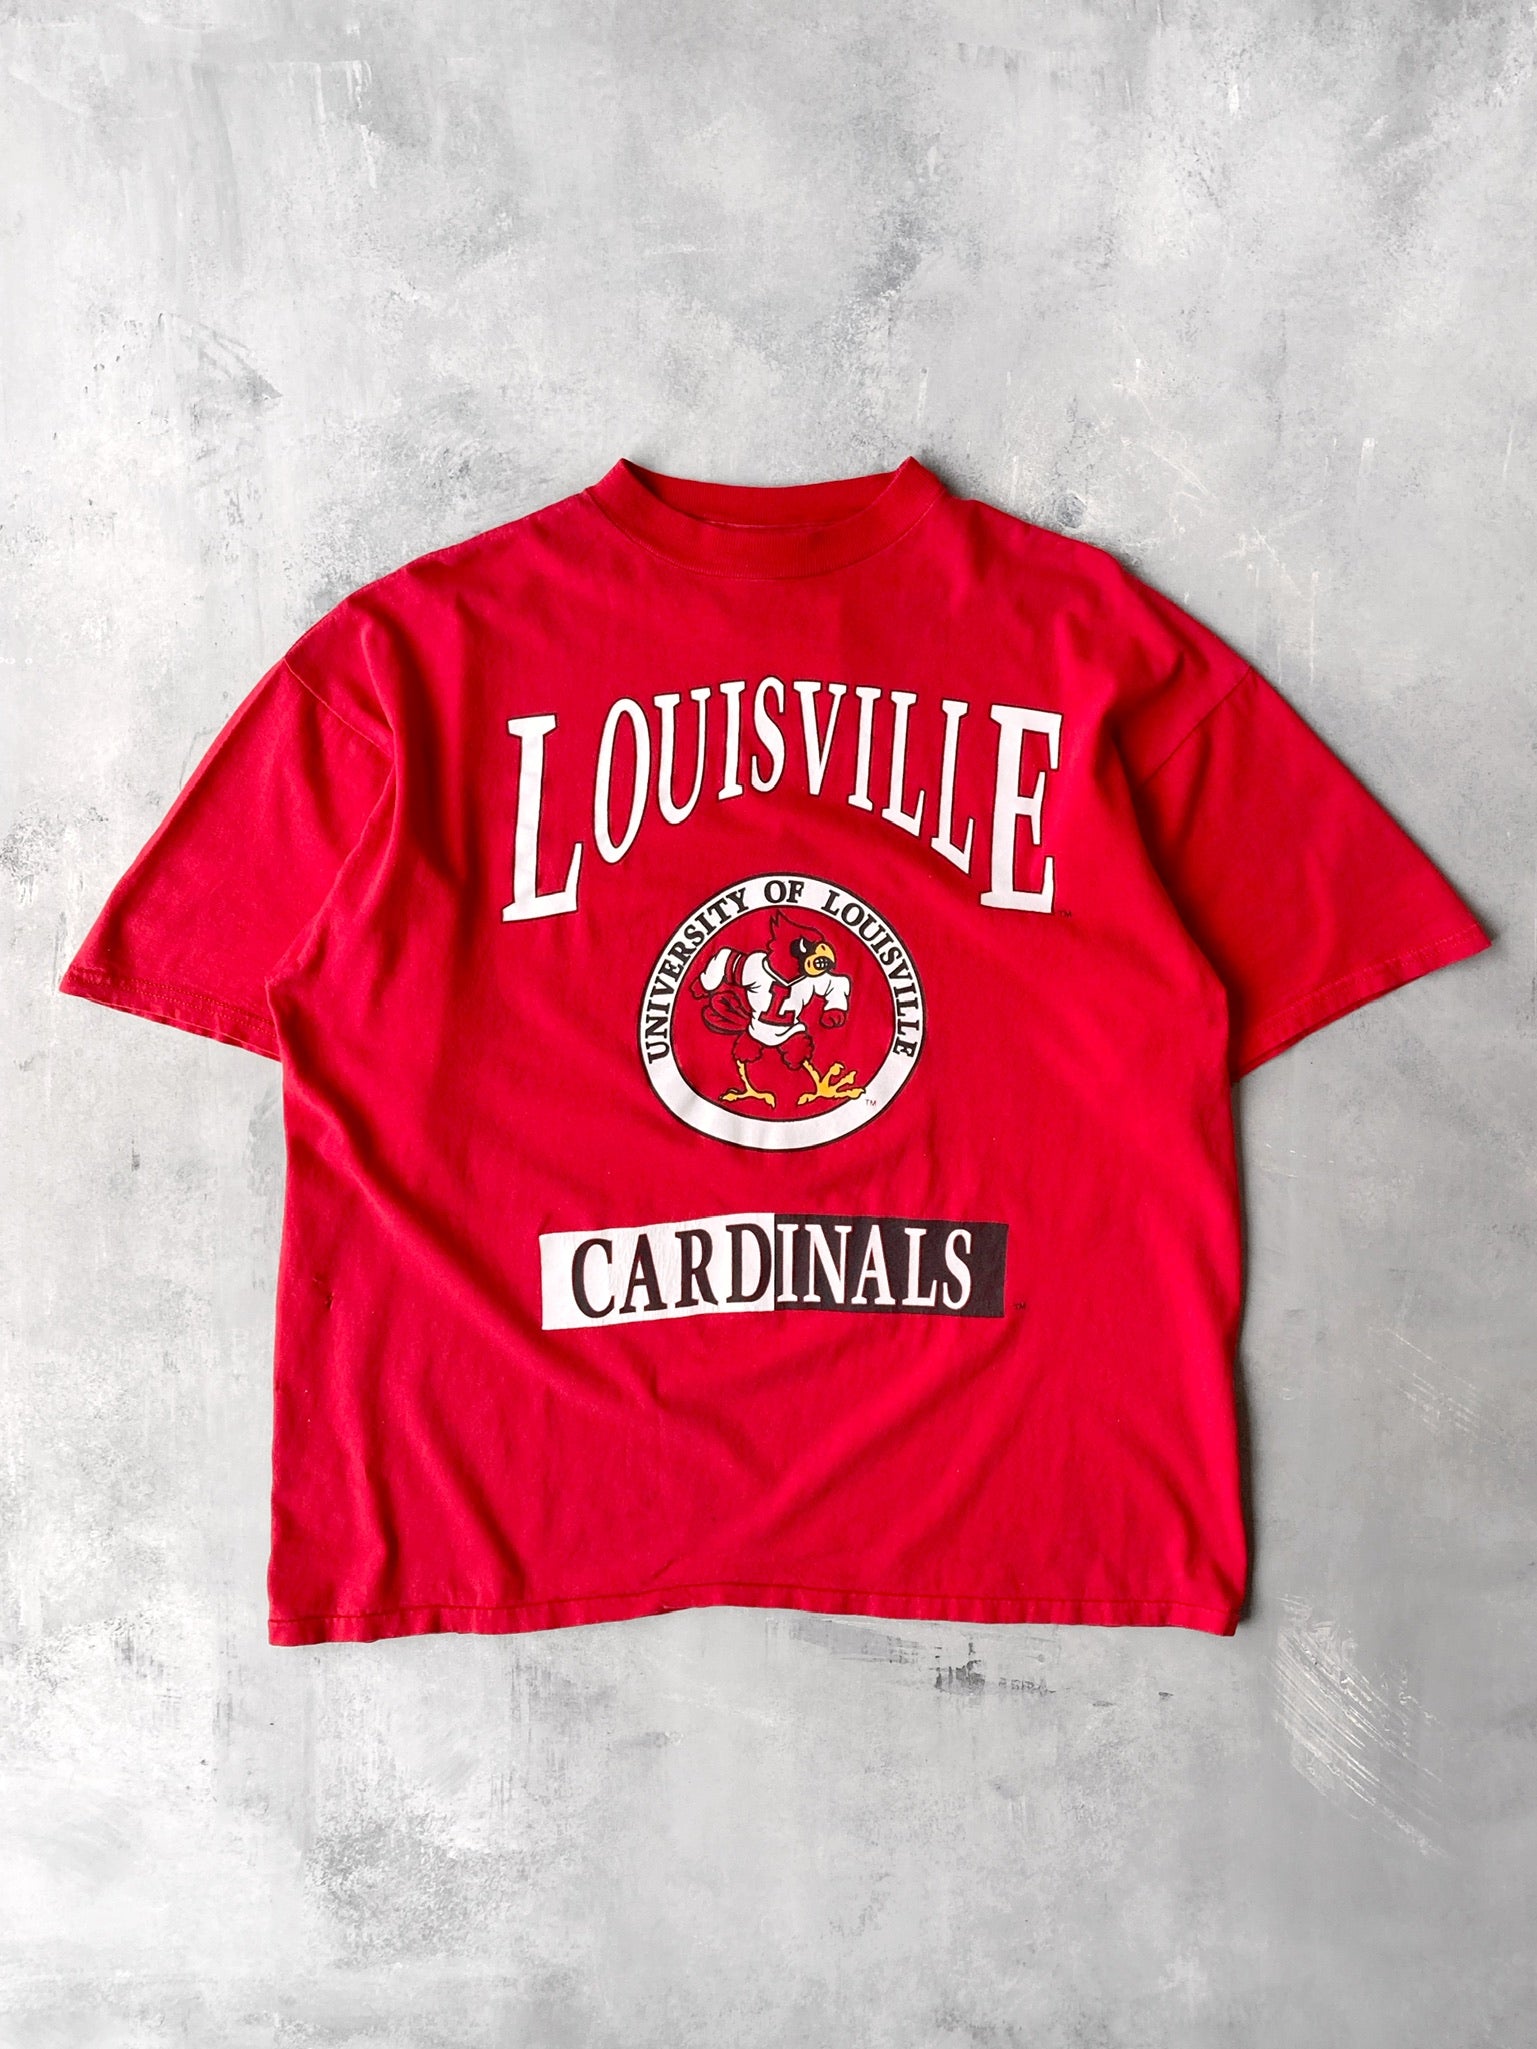 vintage louisville cardinals shirt